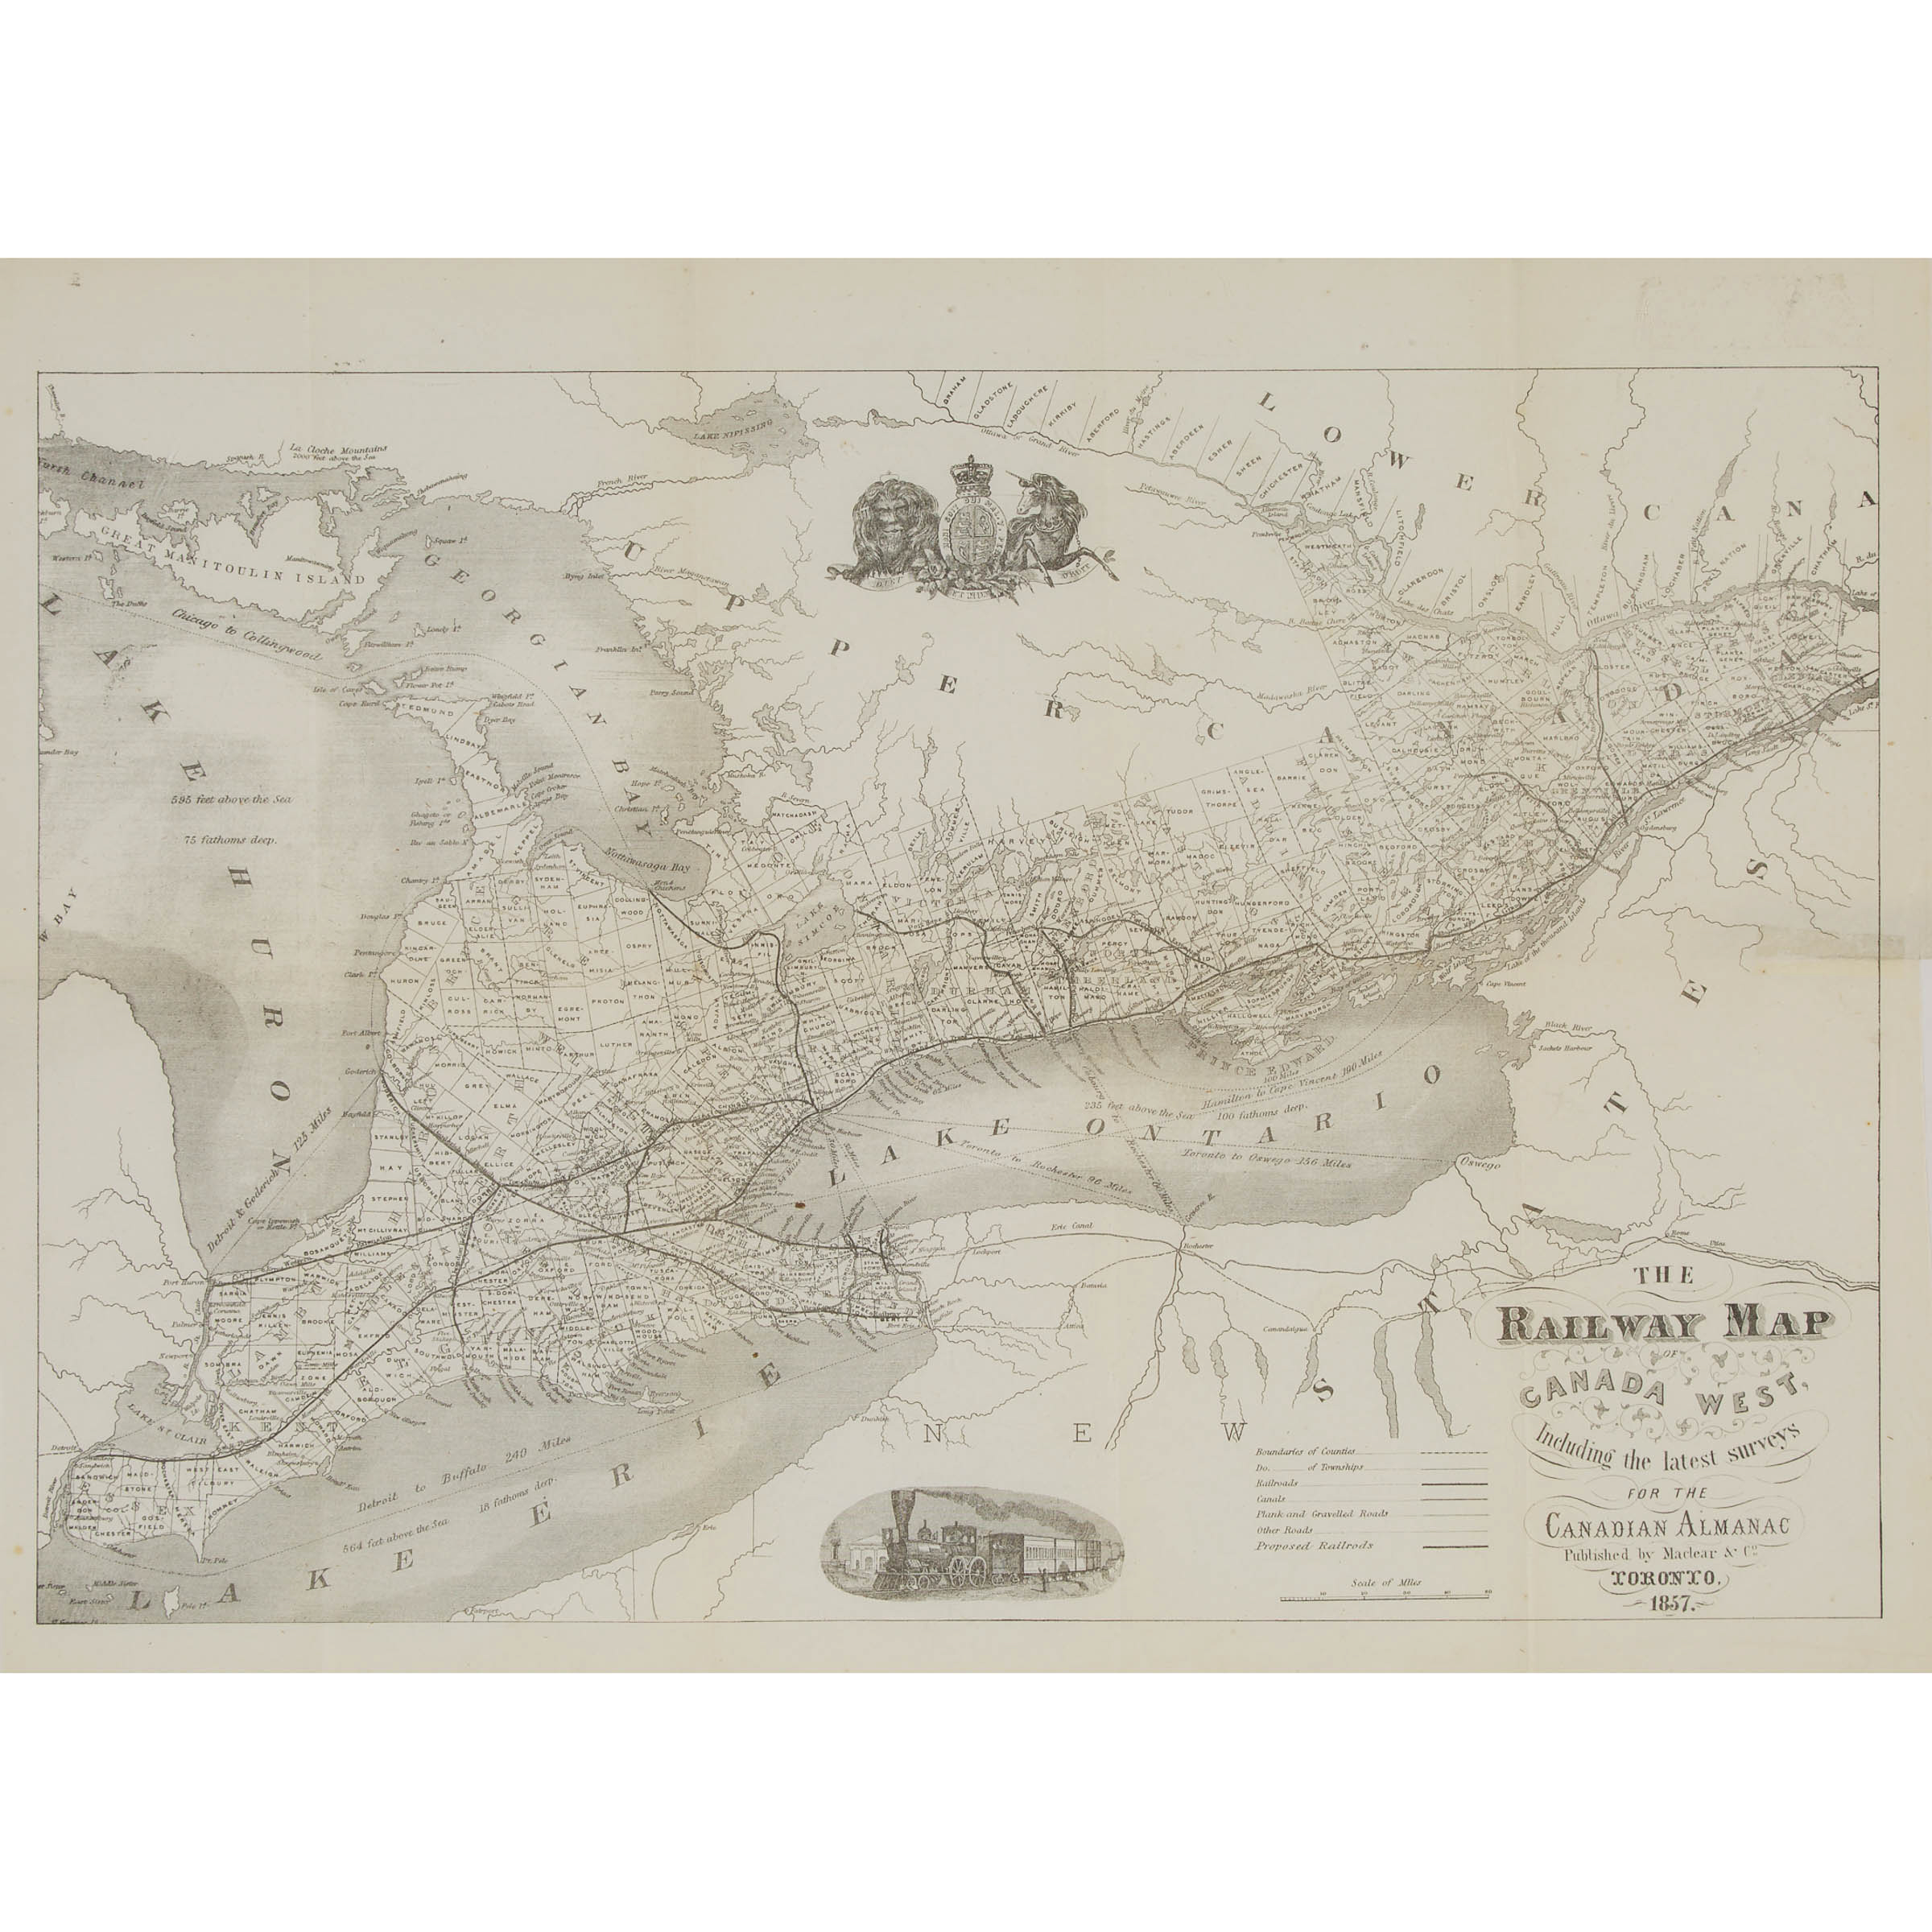 Canadian Almanac Railway Map of Canada West, 1857